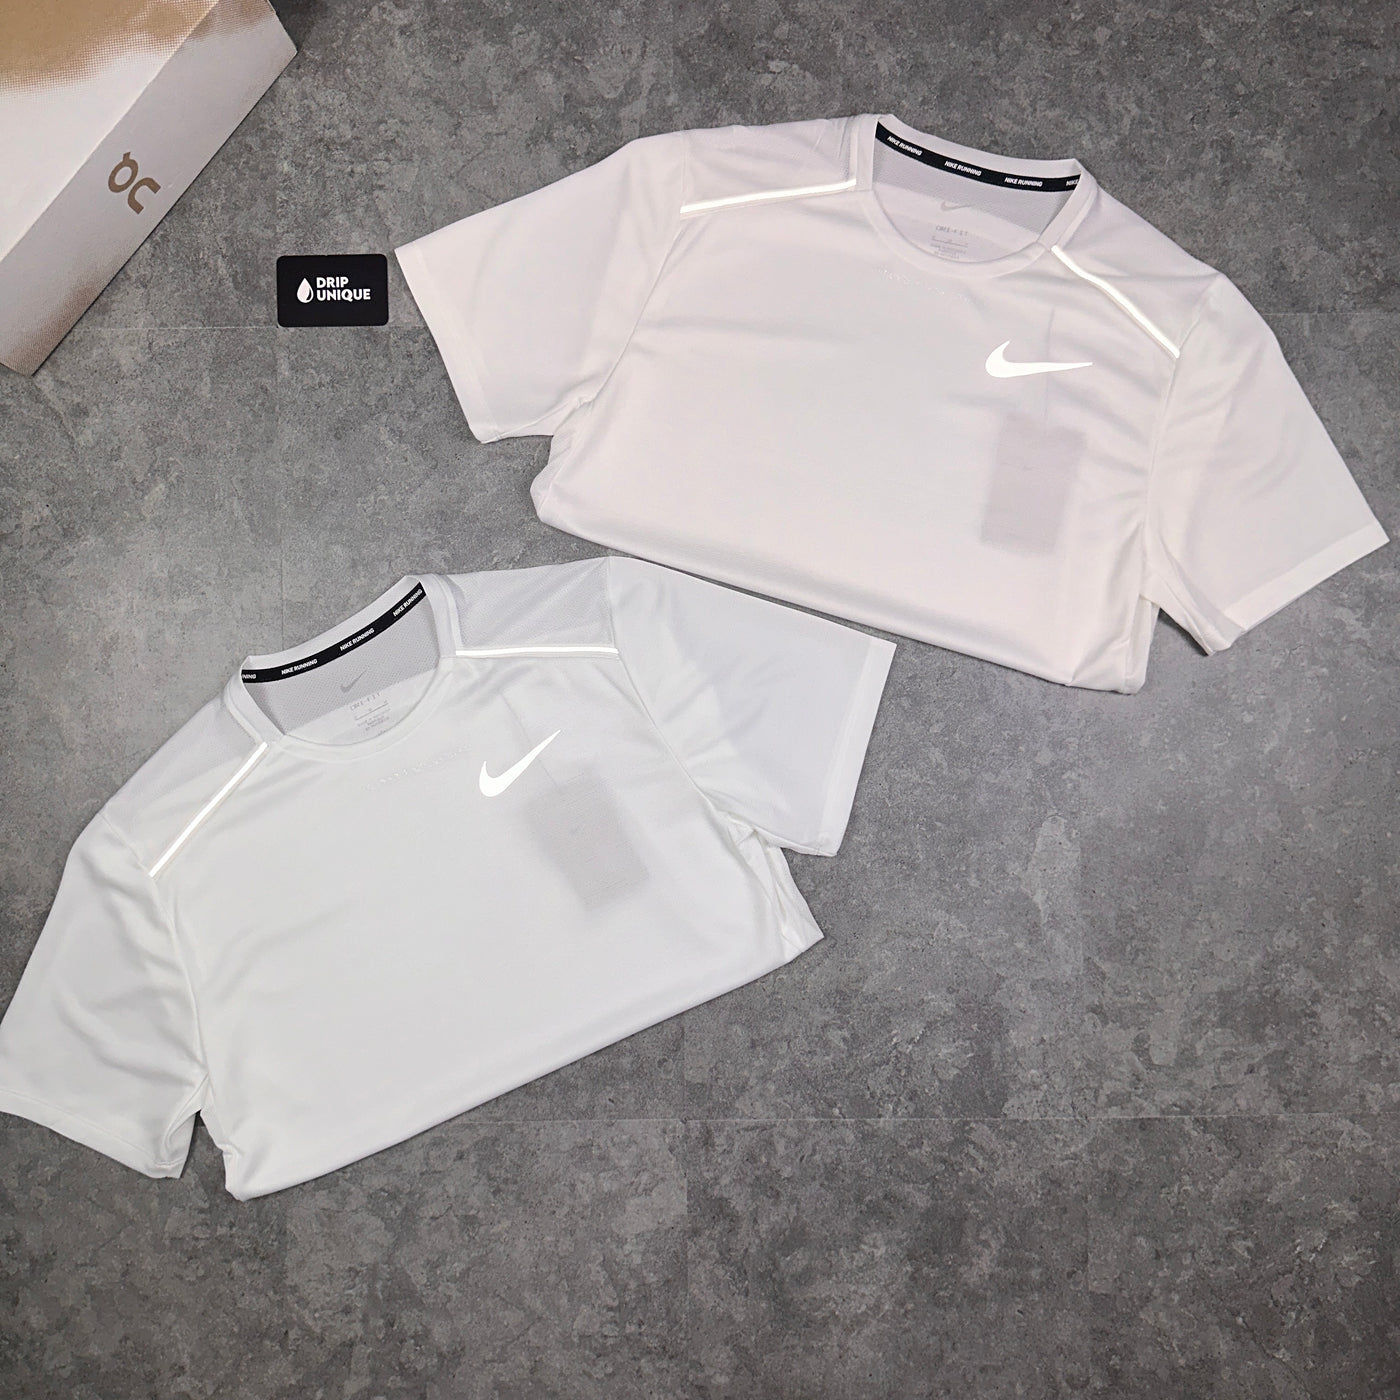 Men's Nike Miler T-Shirt in Ice White, dripuniqueuk